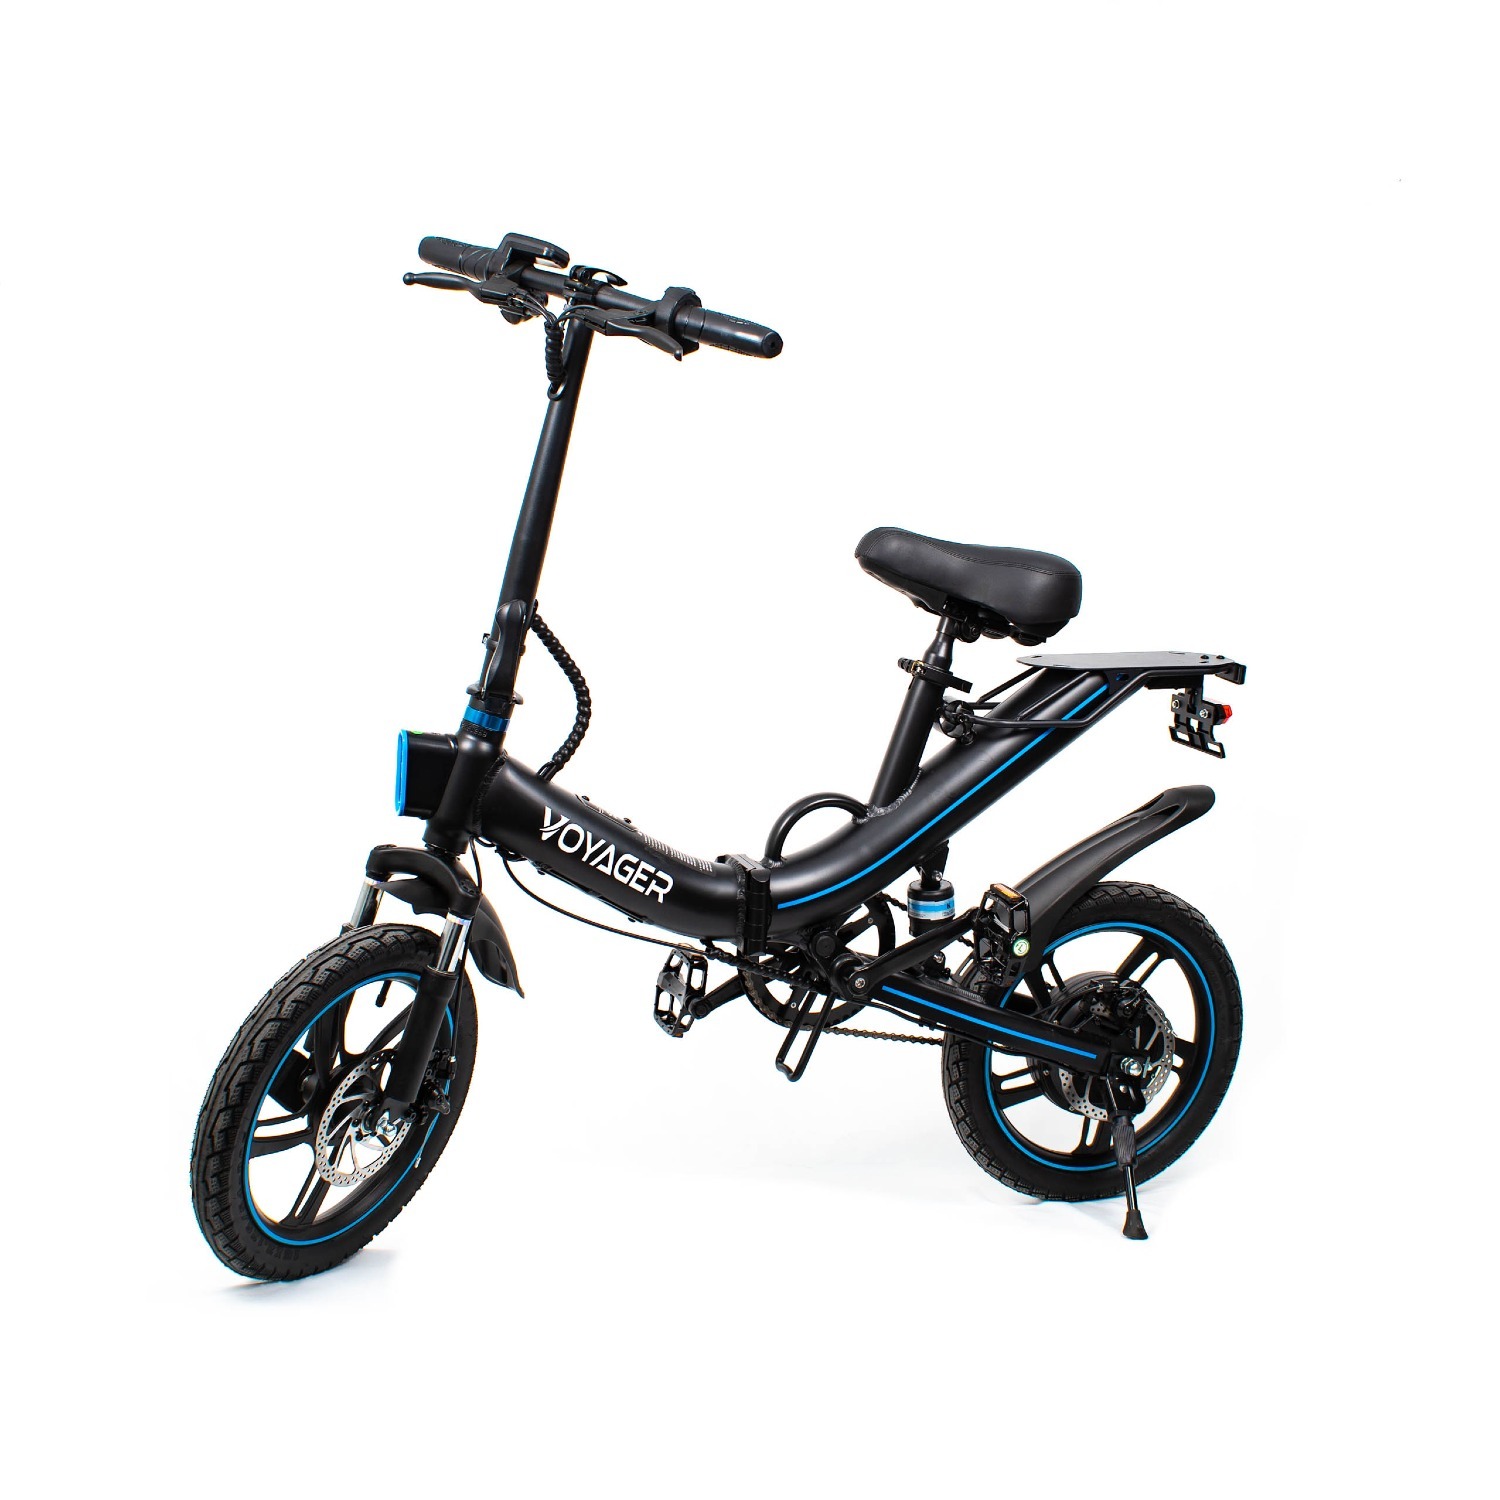 Voyager Radius Pro V2 Foldable Electric Bike w/ 450W Motor (Blue) $399 + Free Shipping